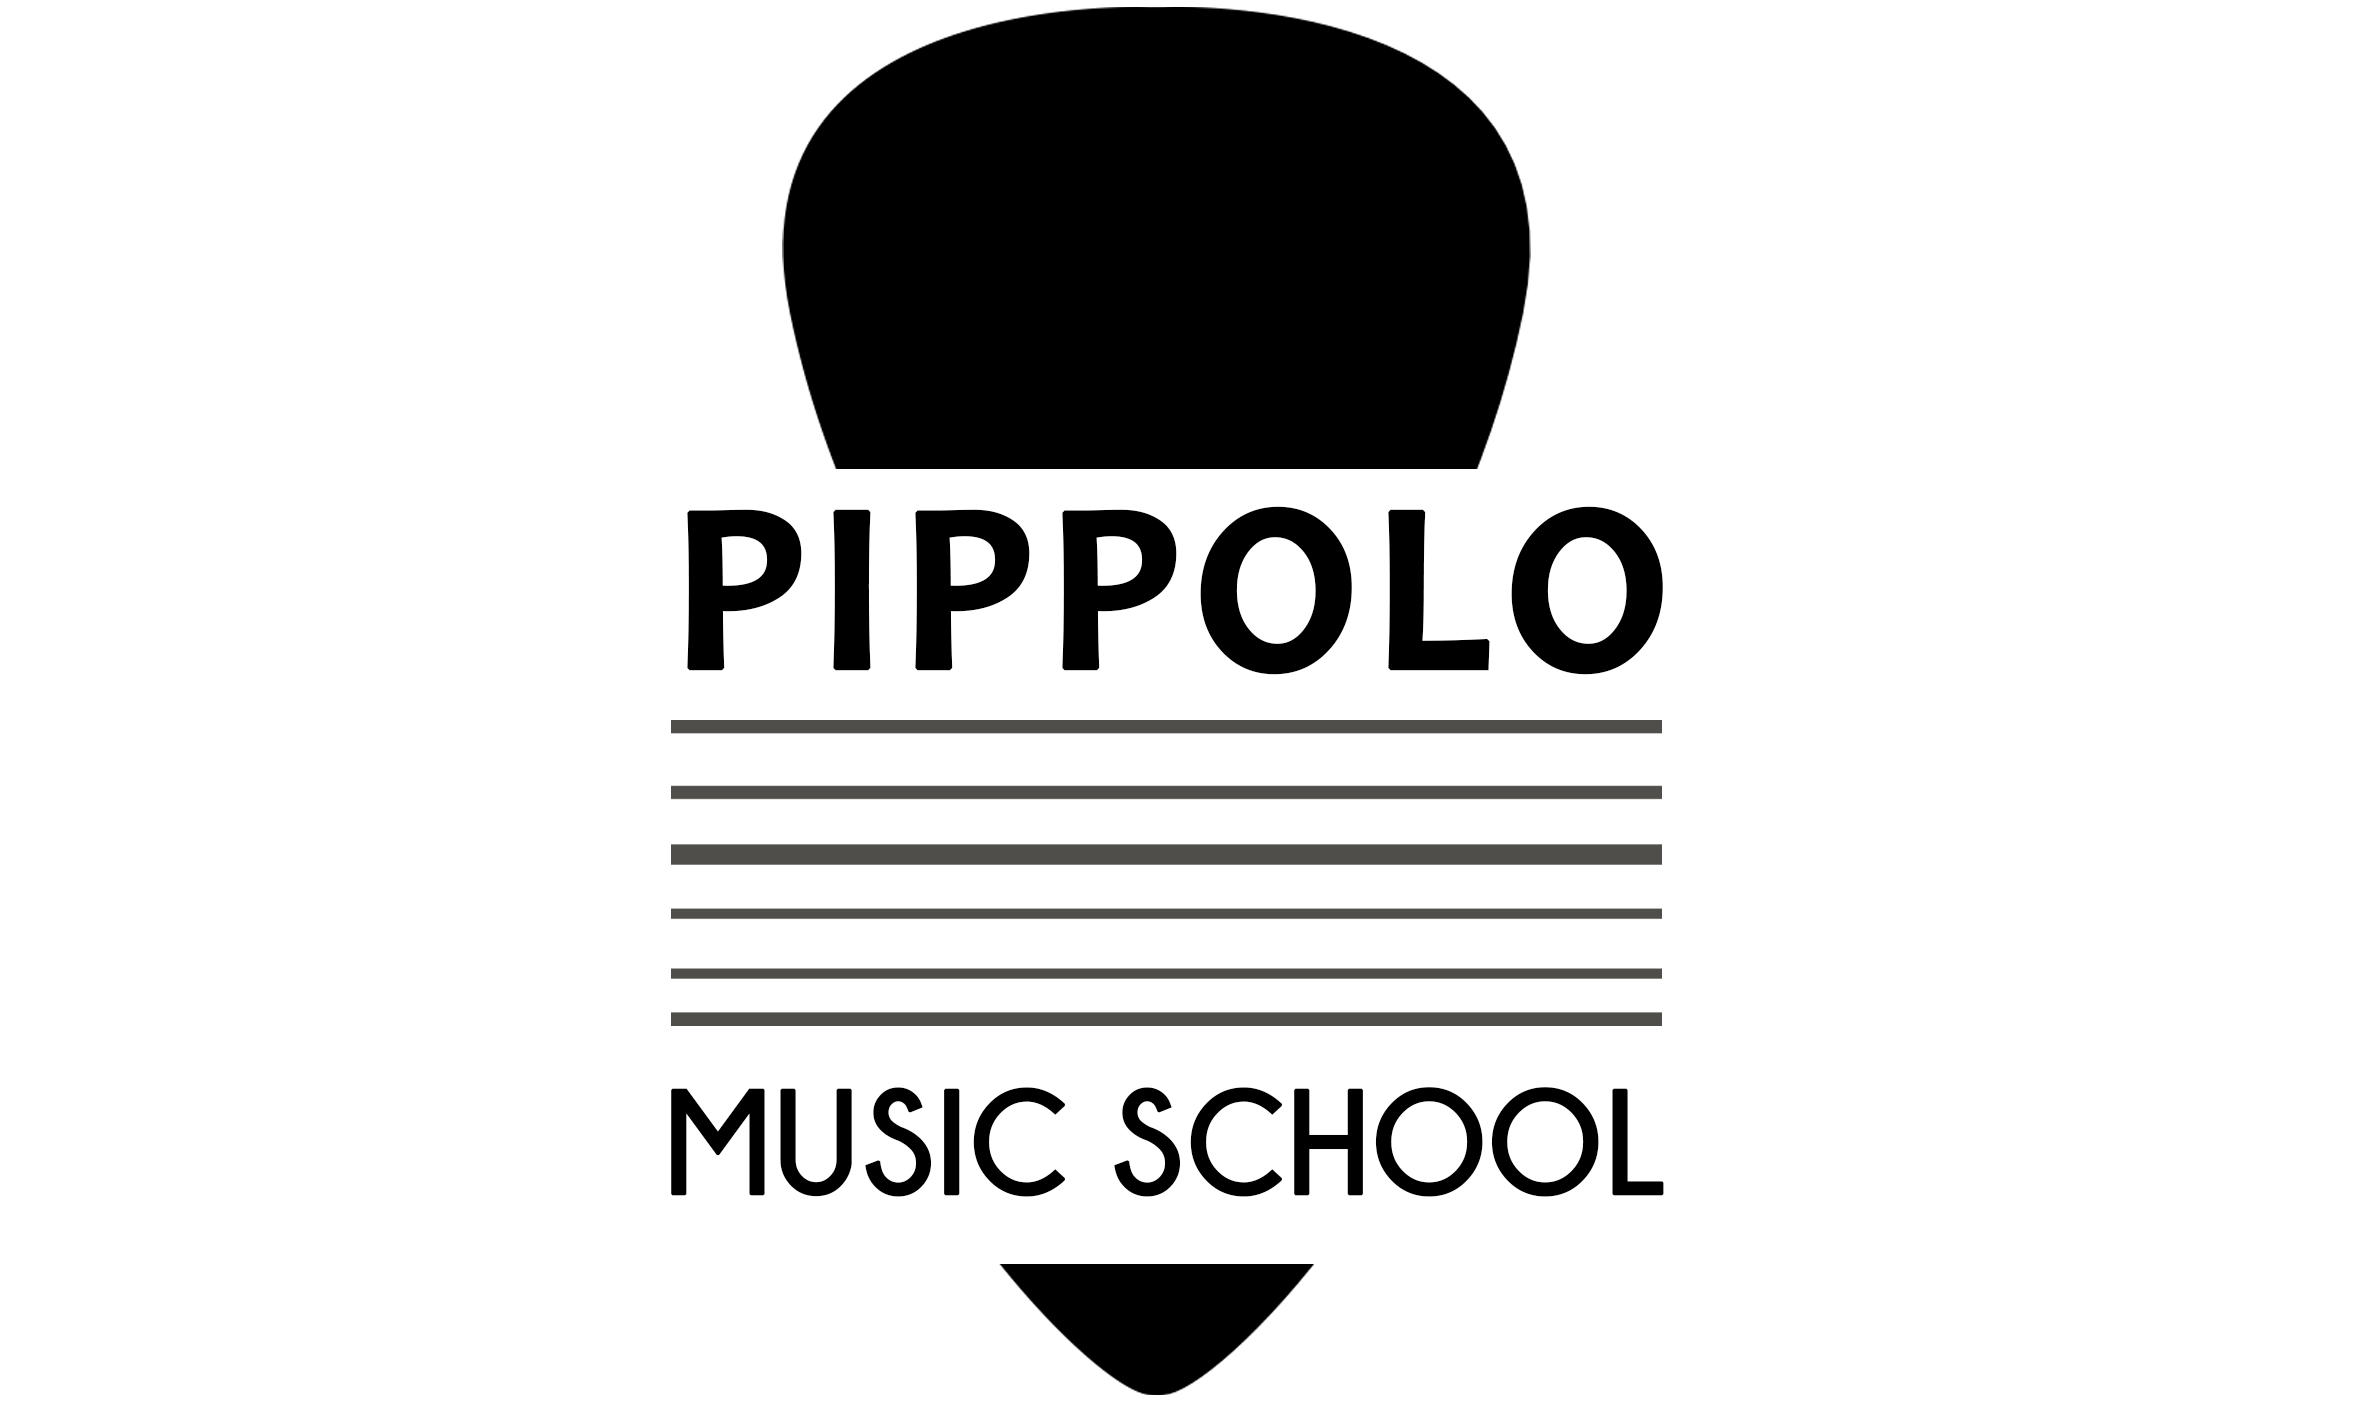 Pippolo - Music School